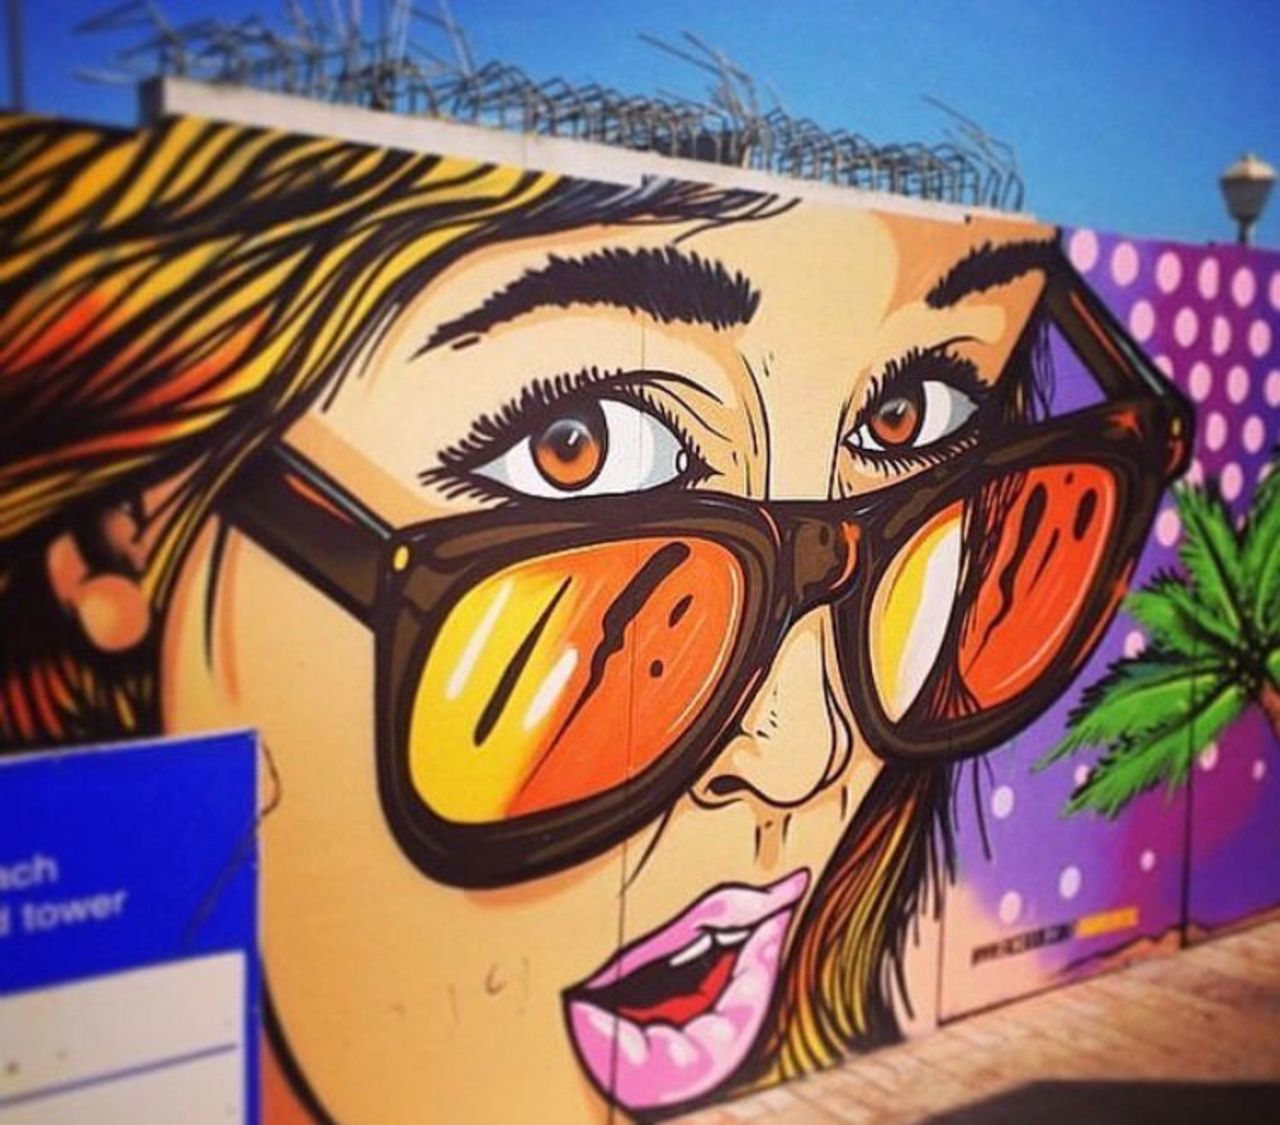 New work by That Damn Vandal #streetart #mural #graffiti #art https://t.co/JOlFhsWGxY